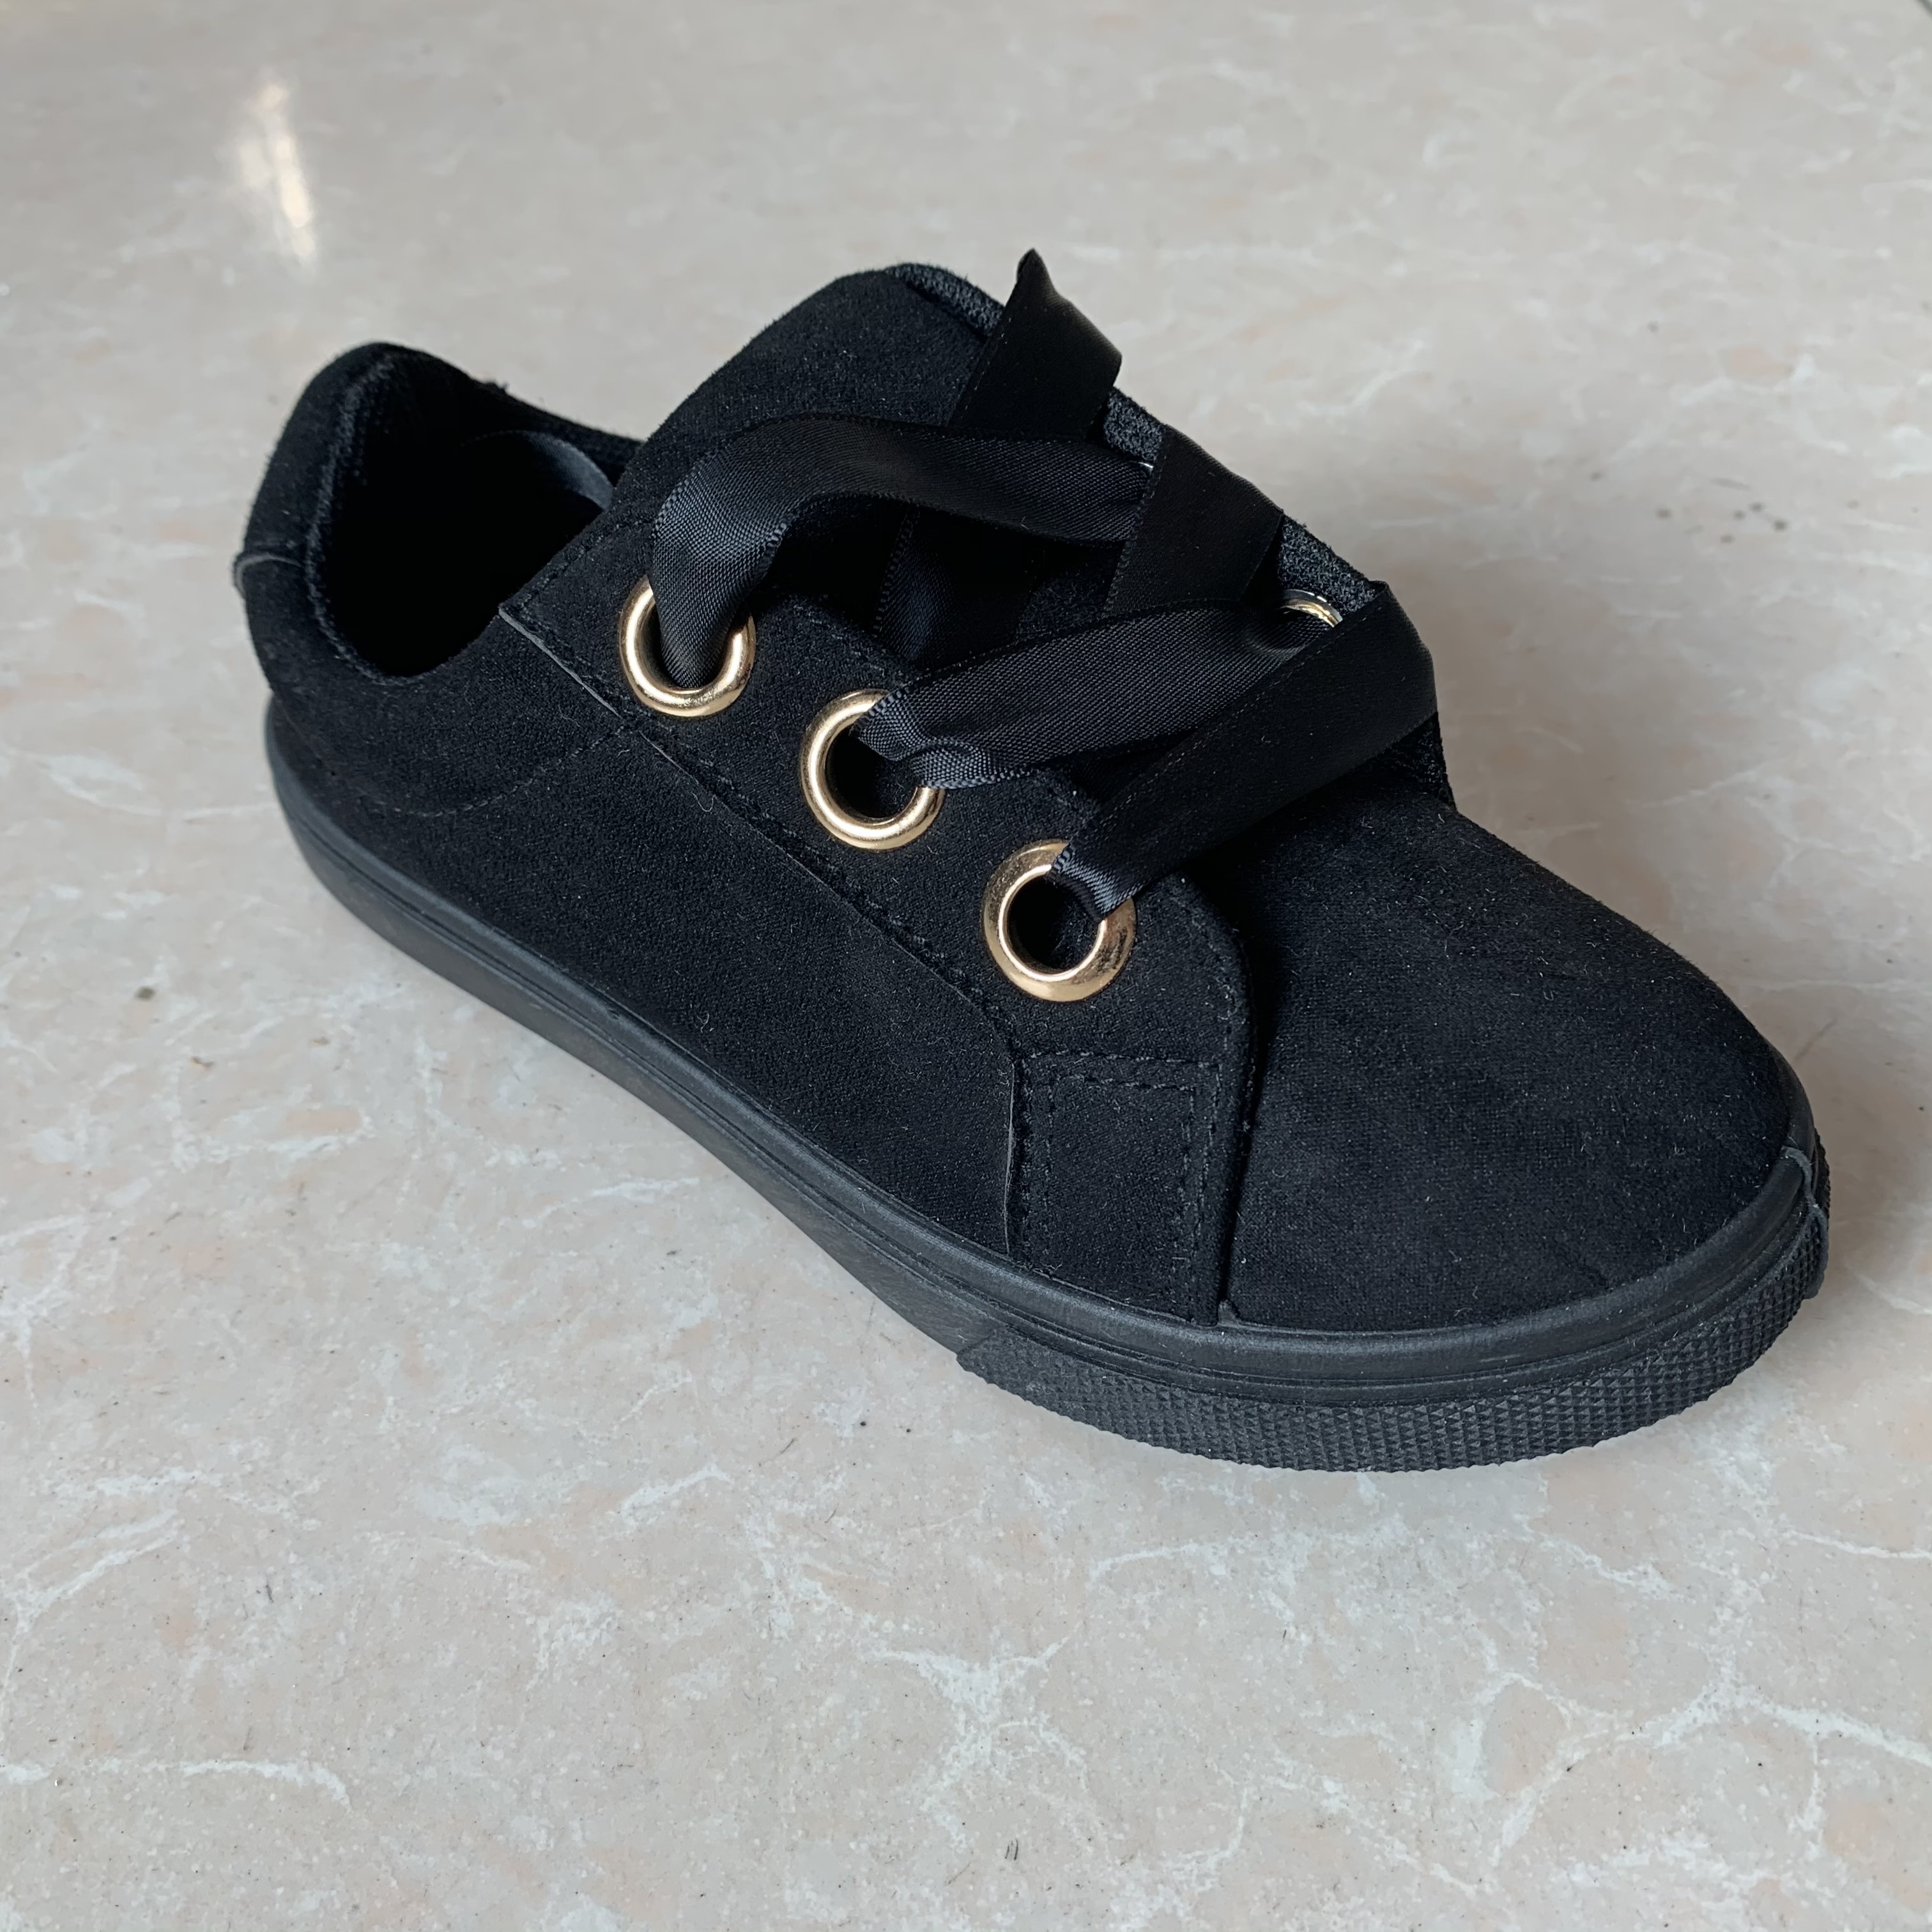 Boys Girls Kids Sneaker Shoes - Toddler Infant Slip on Comfy Kids Non-Slip First Walkers Shoes(Little Kid/Big Kid) 